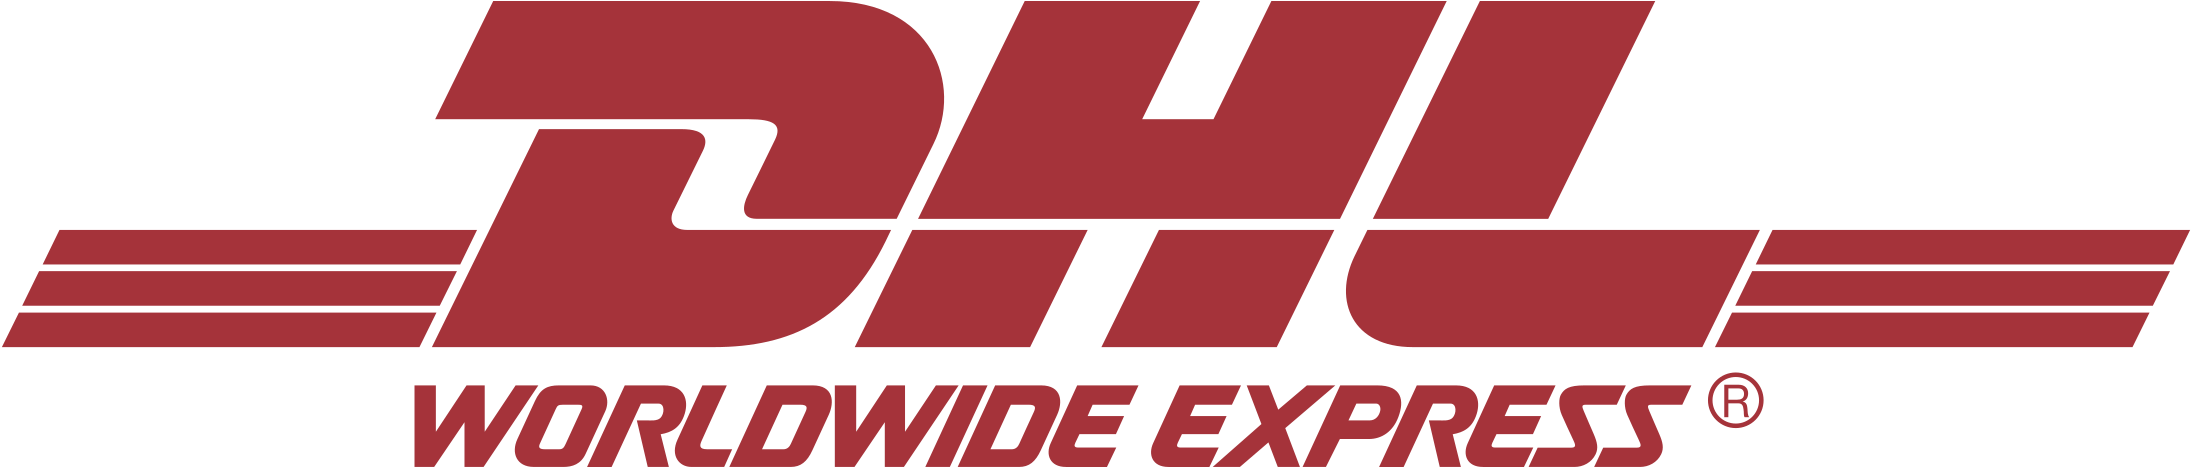 Dhl Logo Png Transparent - Dhl Worldwide Express Logo (2400x2400), Png Download